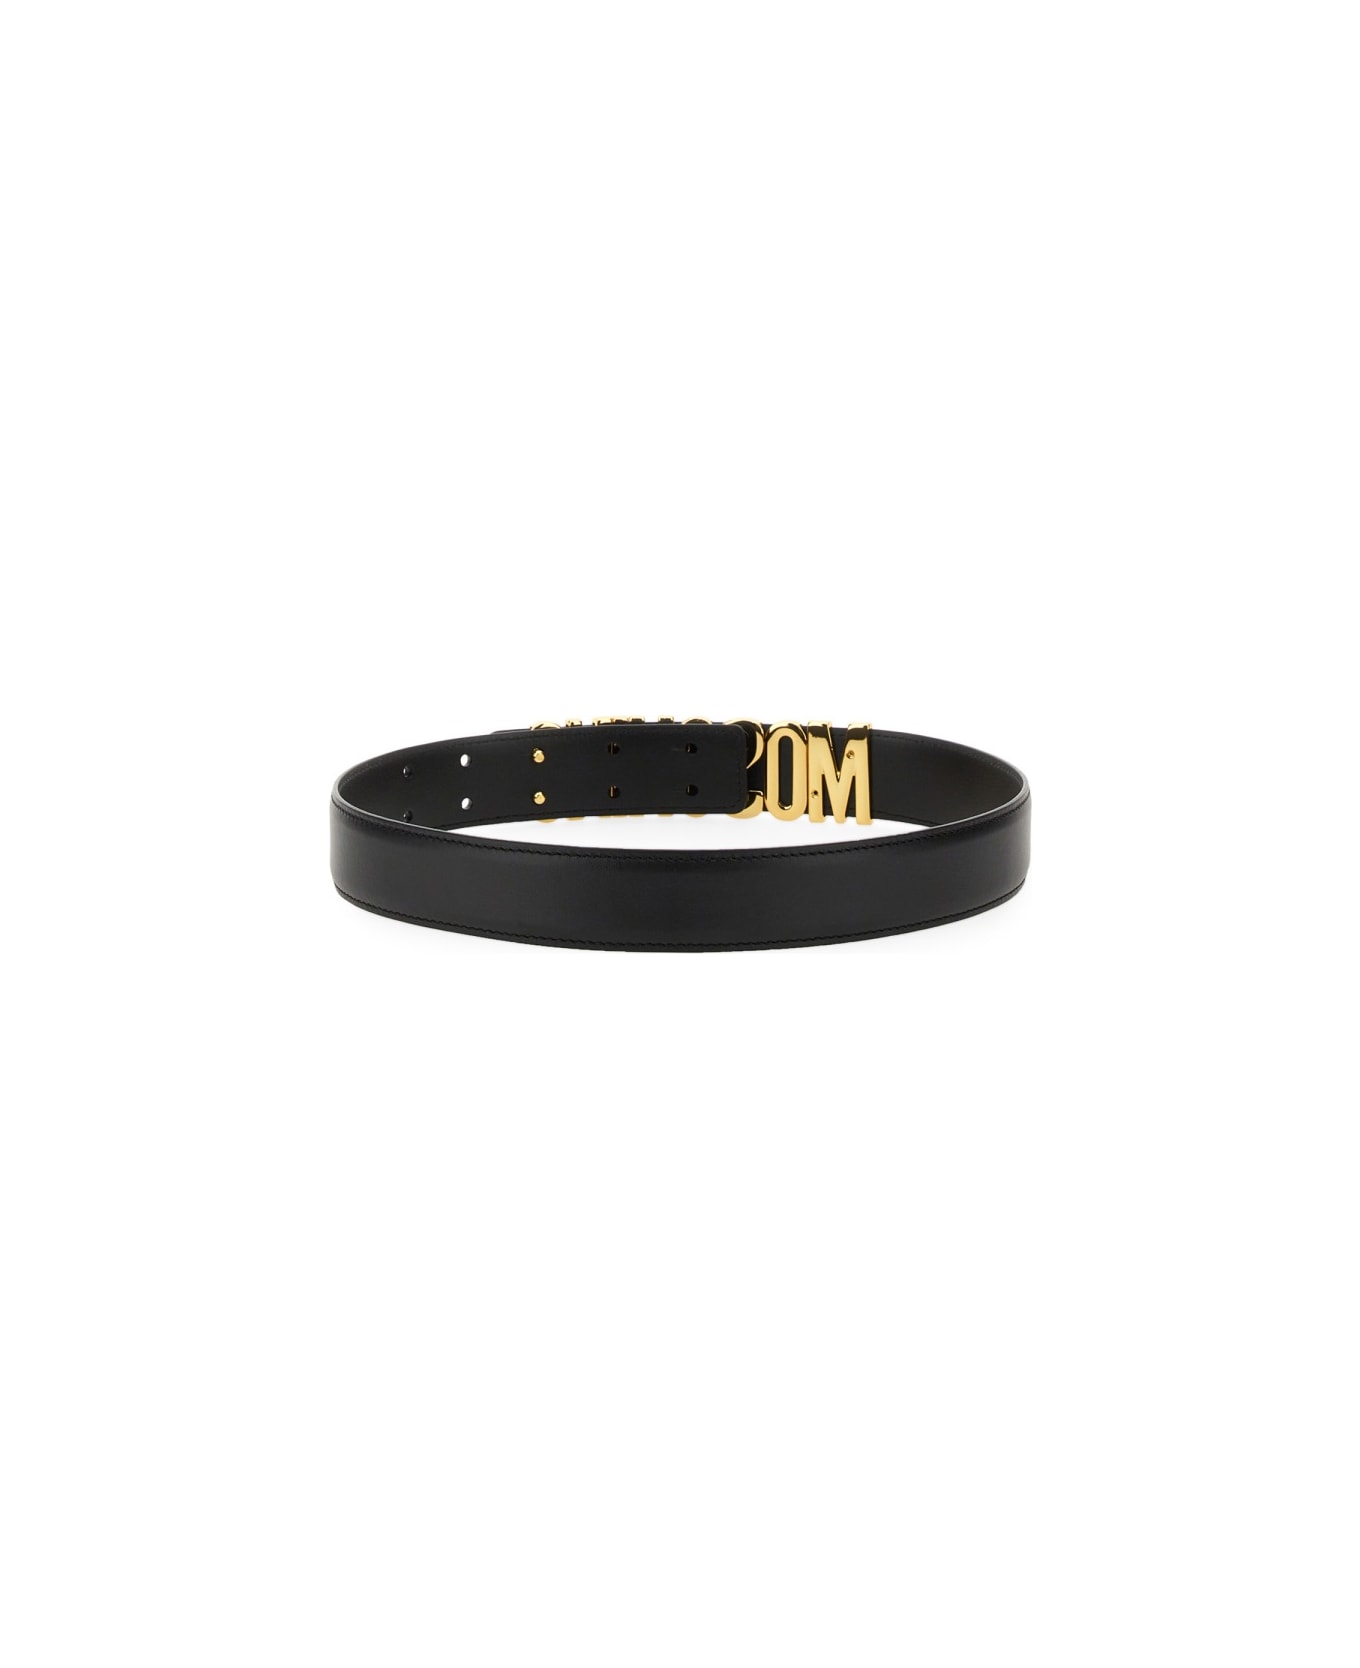 Moschino Belt With Logo - Black